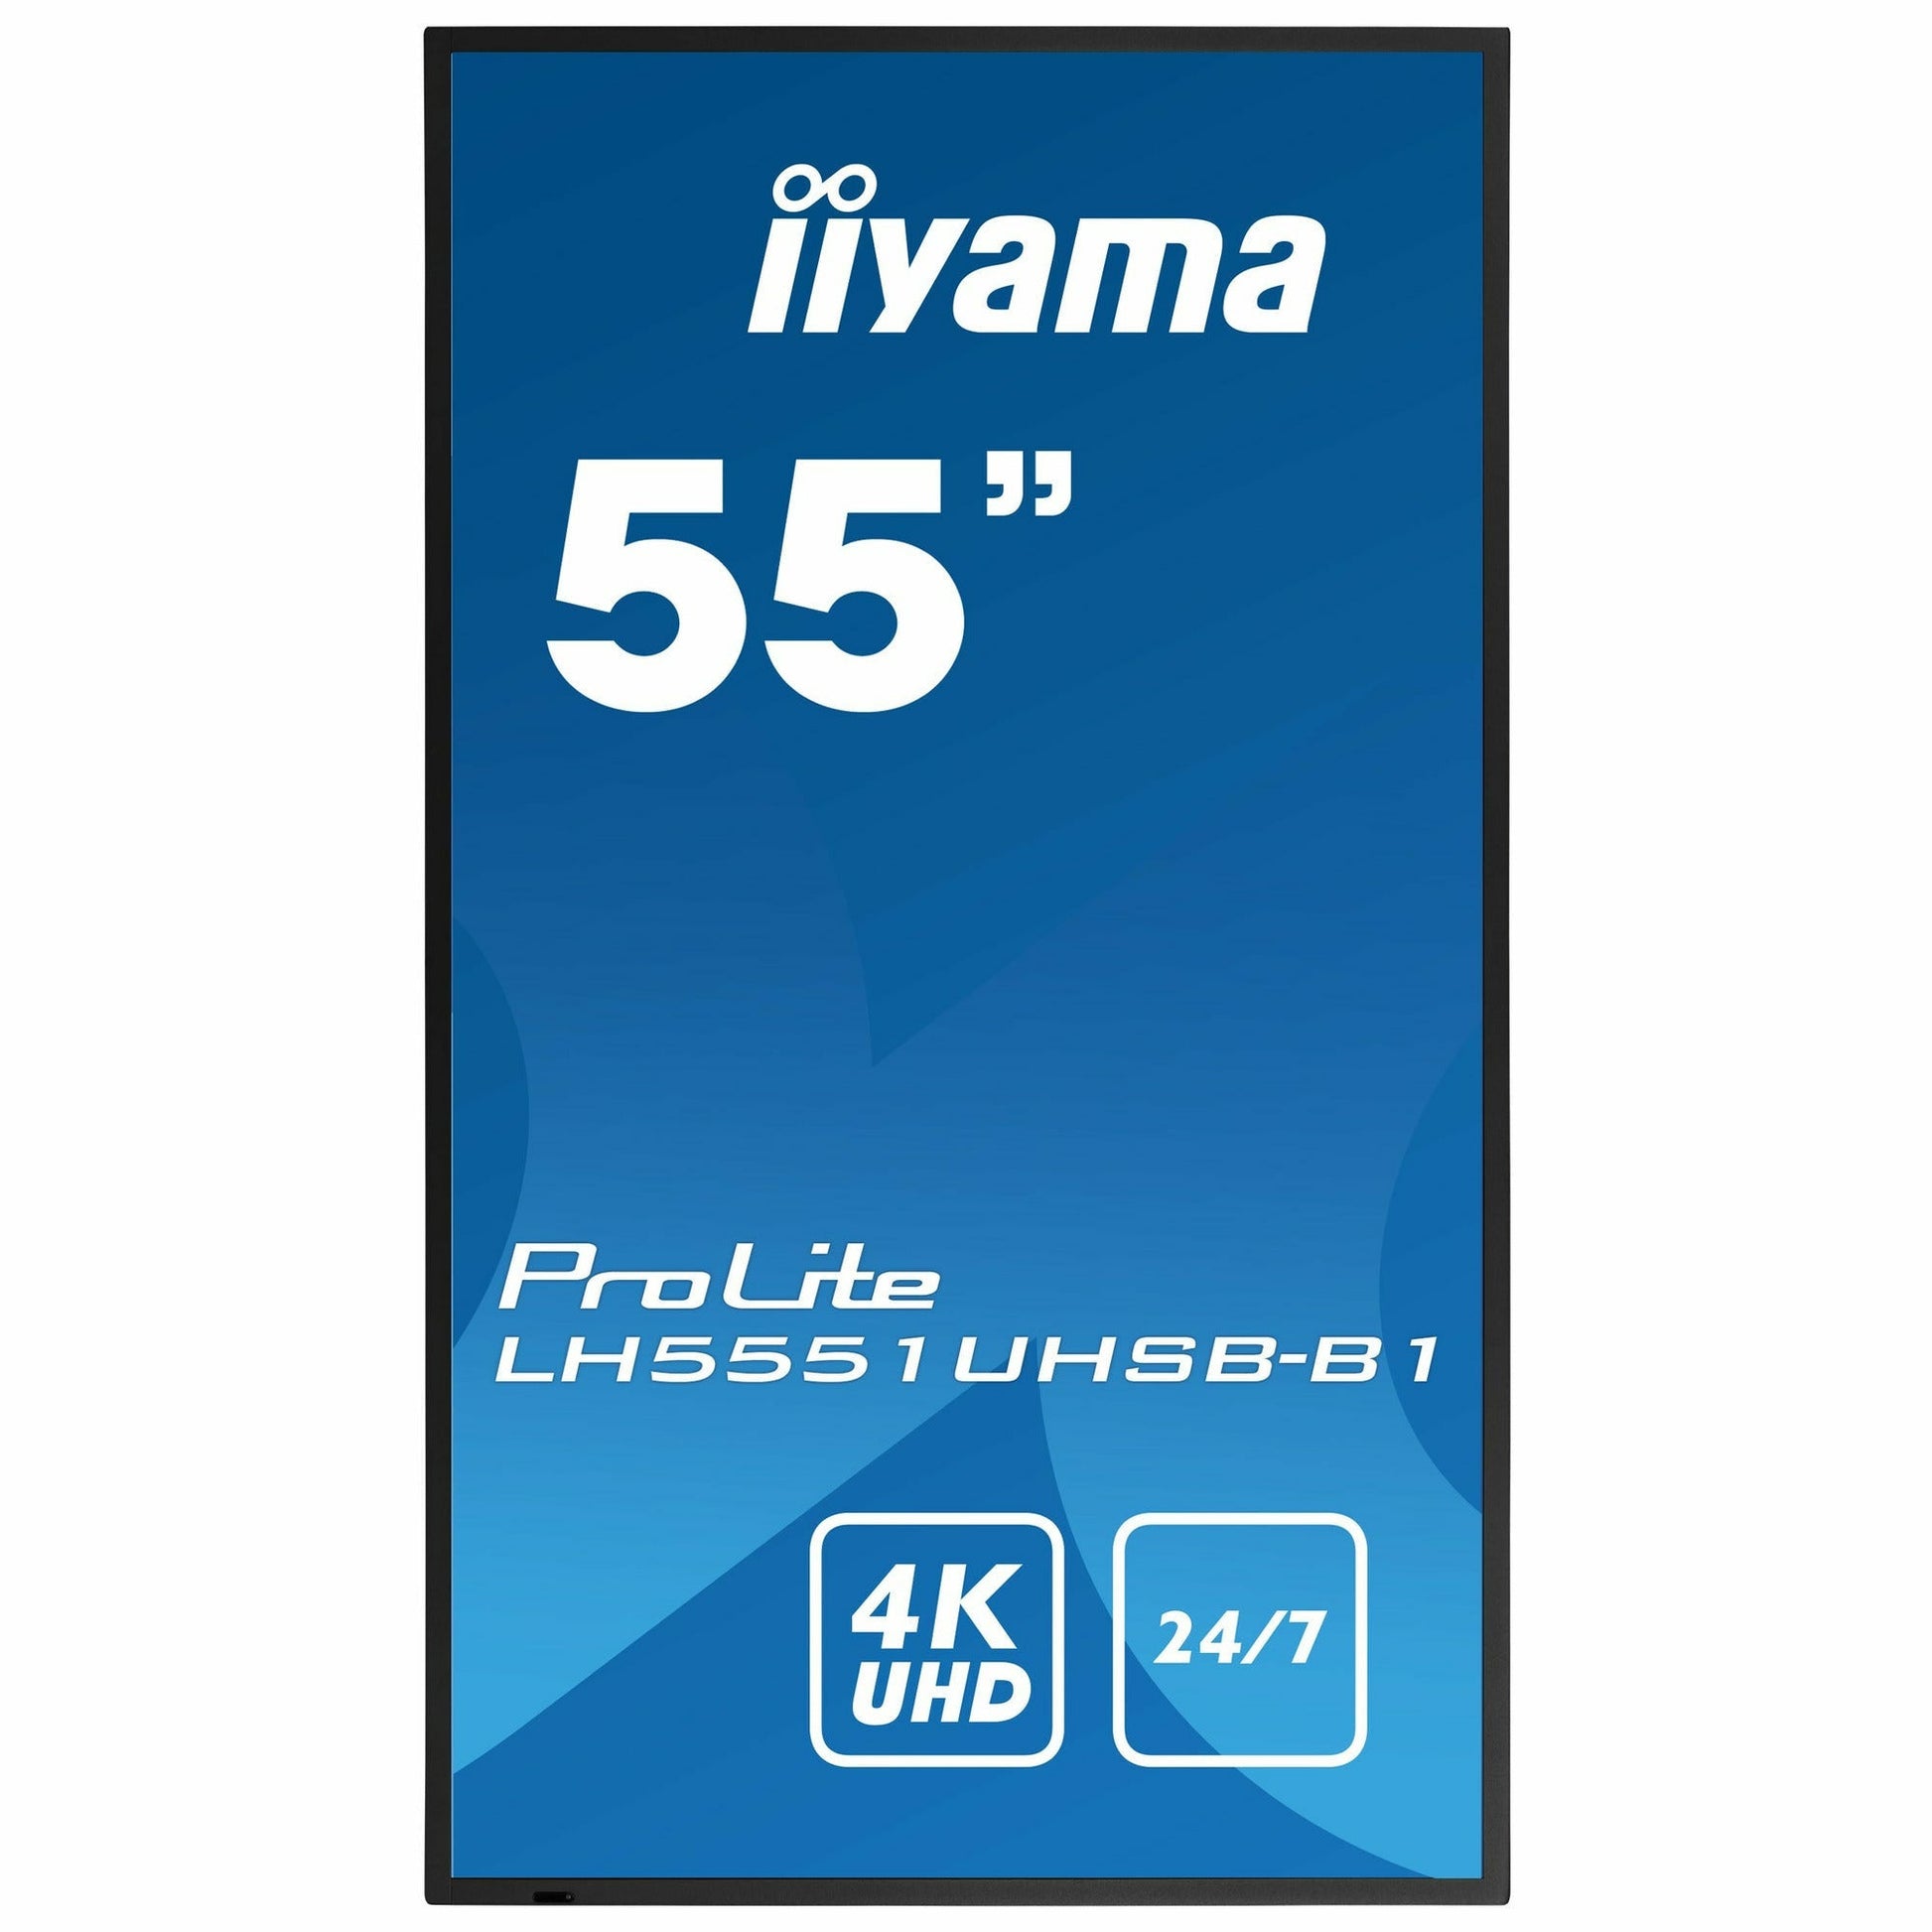 Iiyama ProLite LH5551UHSB-B1 55" IPS 4K UHD Professional 24/7 Digital Signage Display with Intel SDM Slot